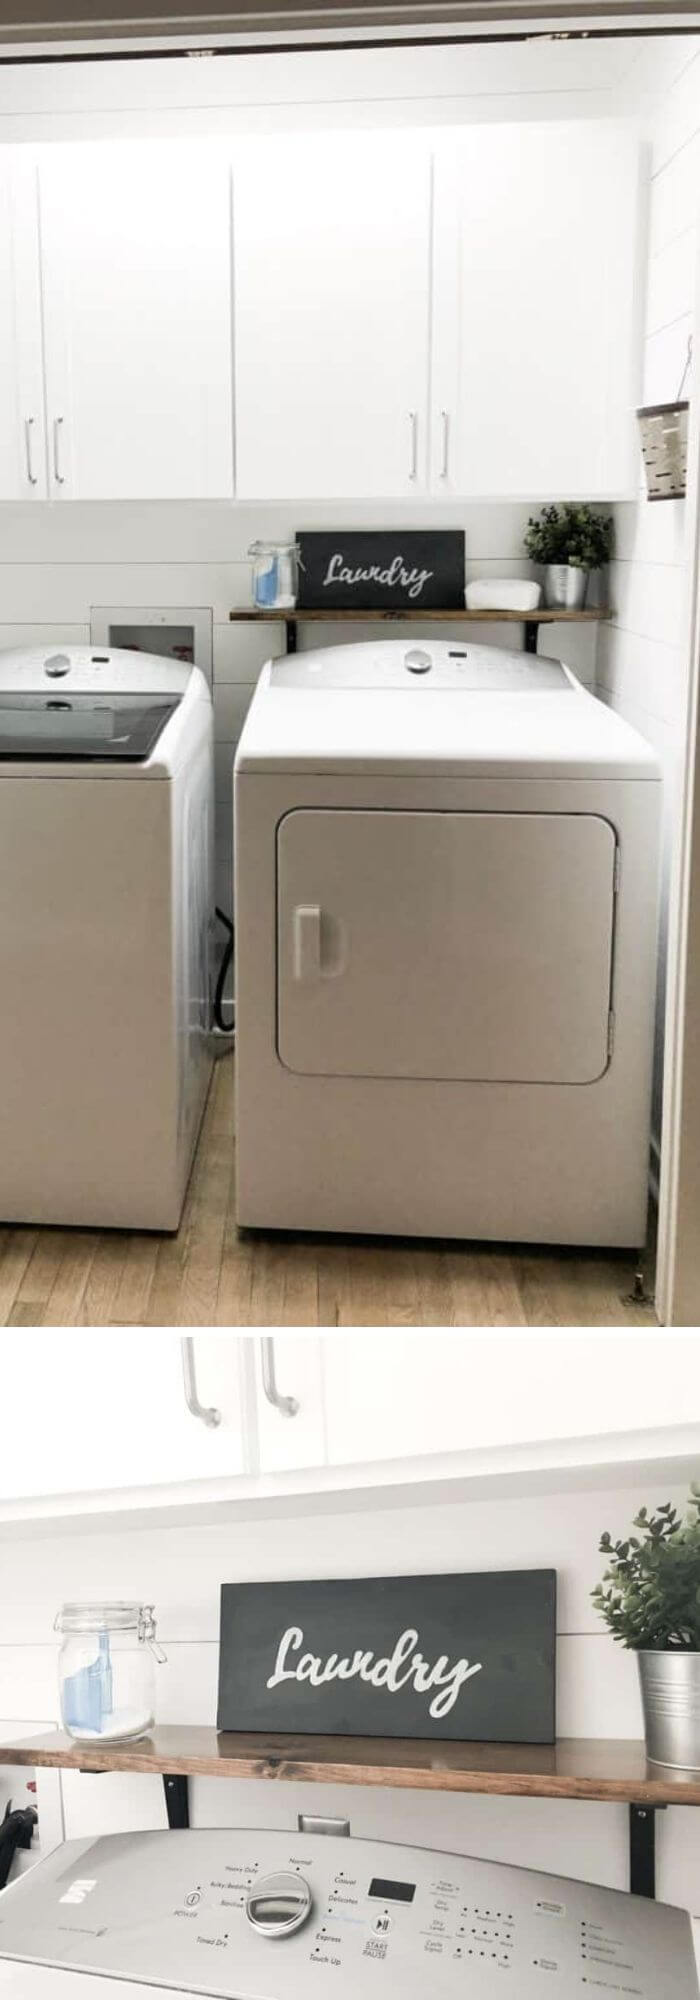 4 laundry room organization ideas